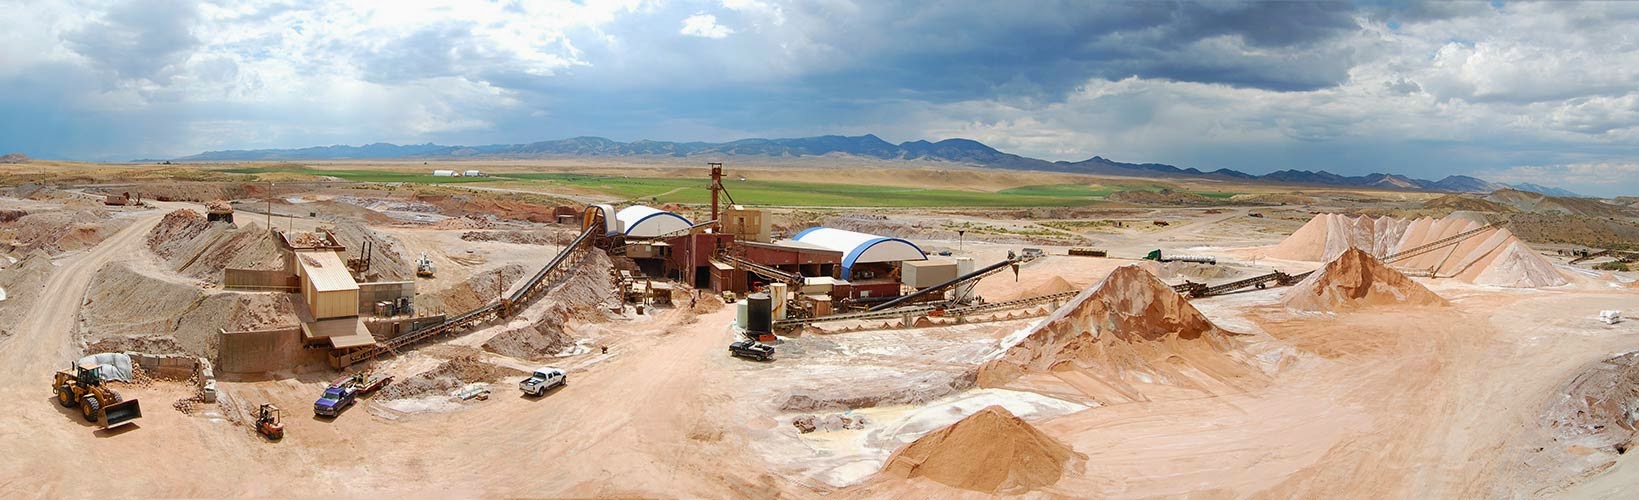 The Redmond salt mine produces popular natural products like Redmond Real Salt and Redmond Clay.